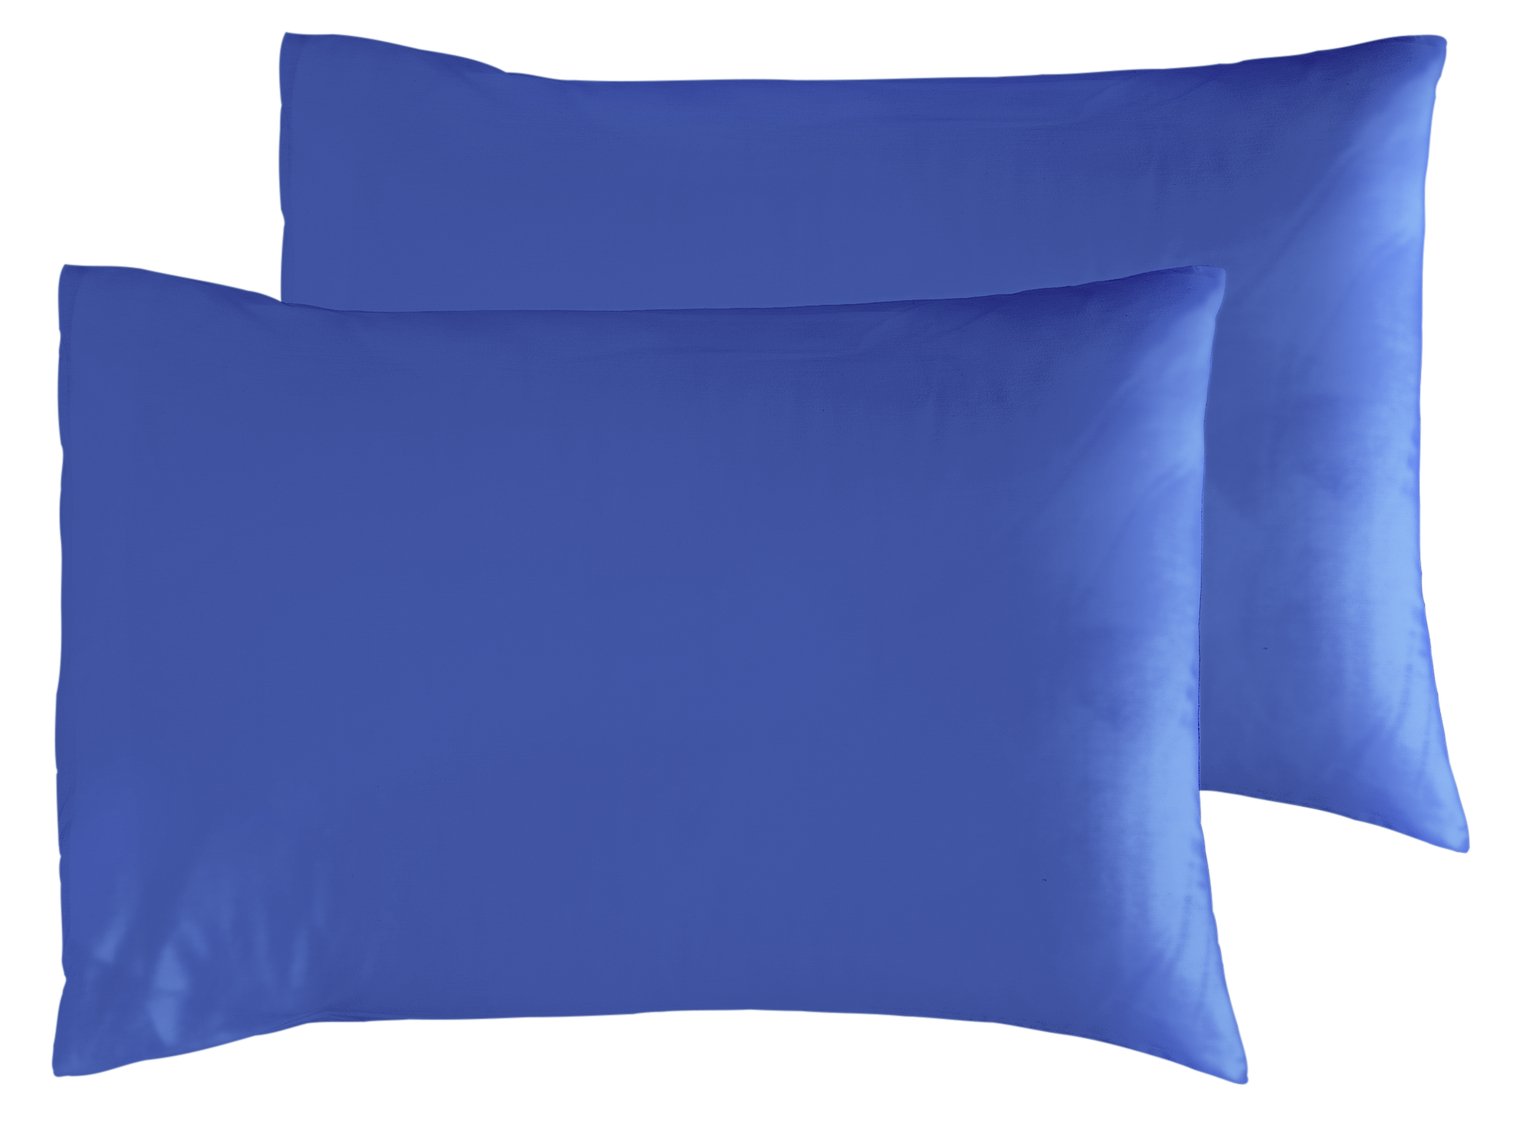 Habitat Plain Standard Pillowcase Pair - Cobalt Blue